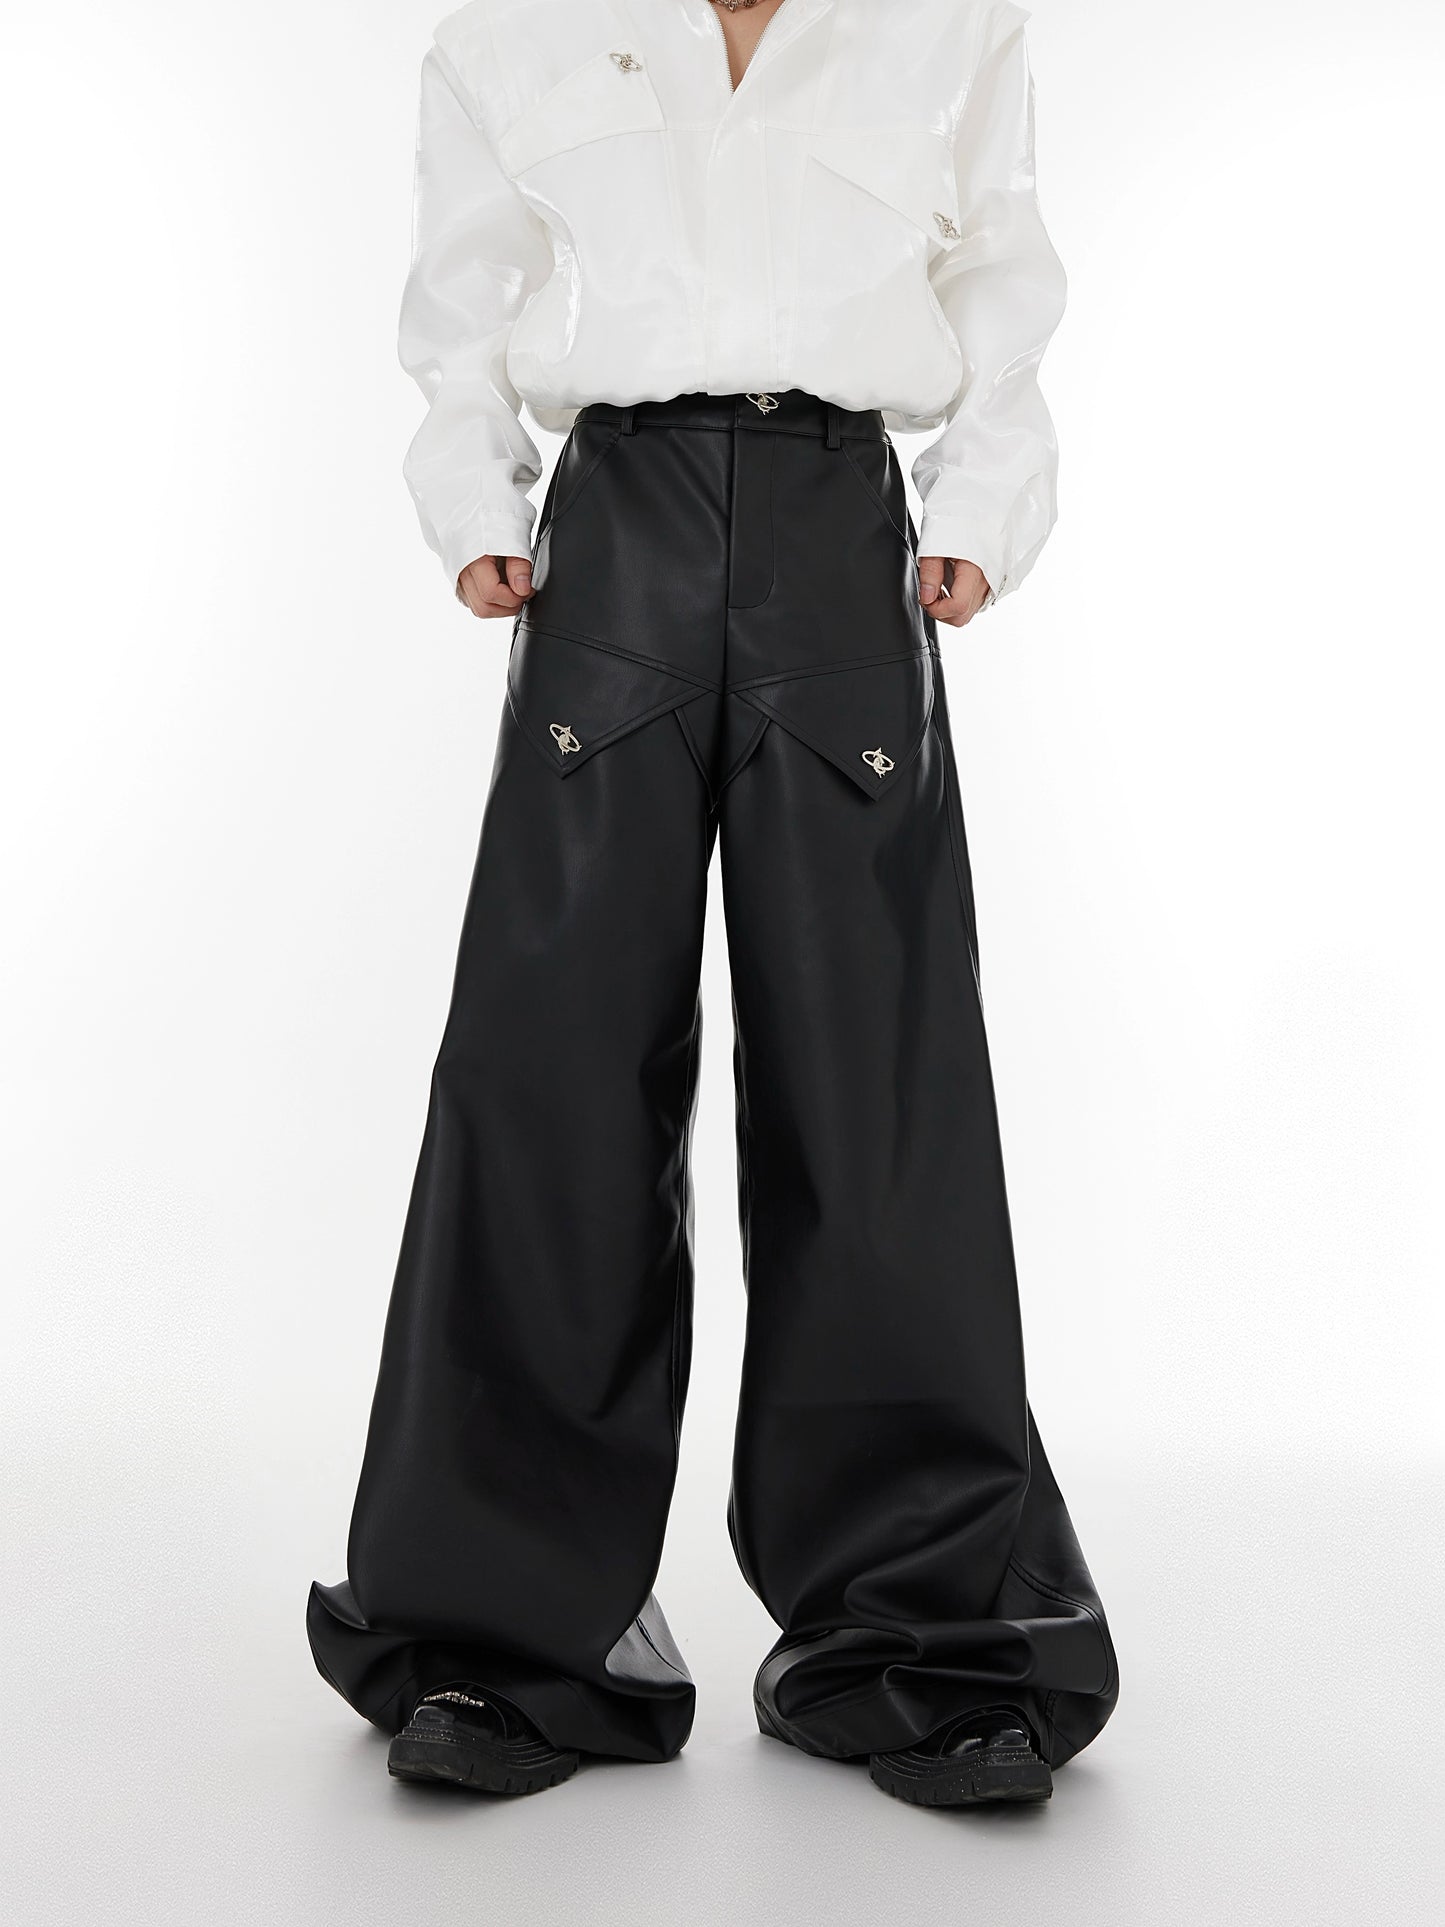 CulturE niche metal logo design leather pants, high-waisted wide-leg pants, three-dimensional panels, loose drape trousers